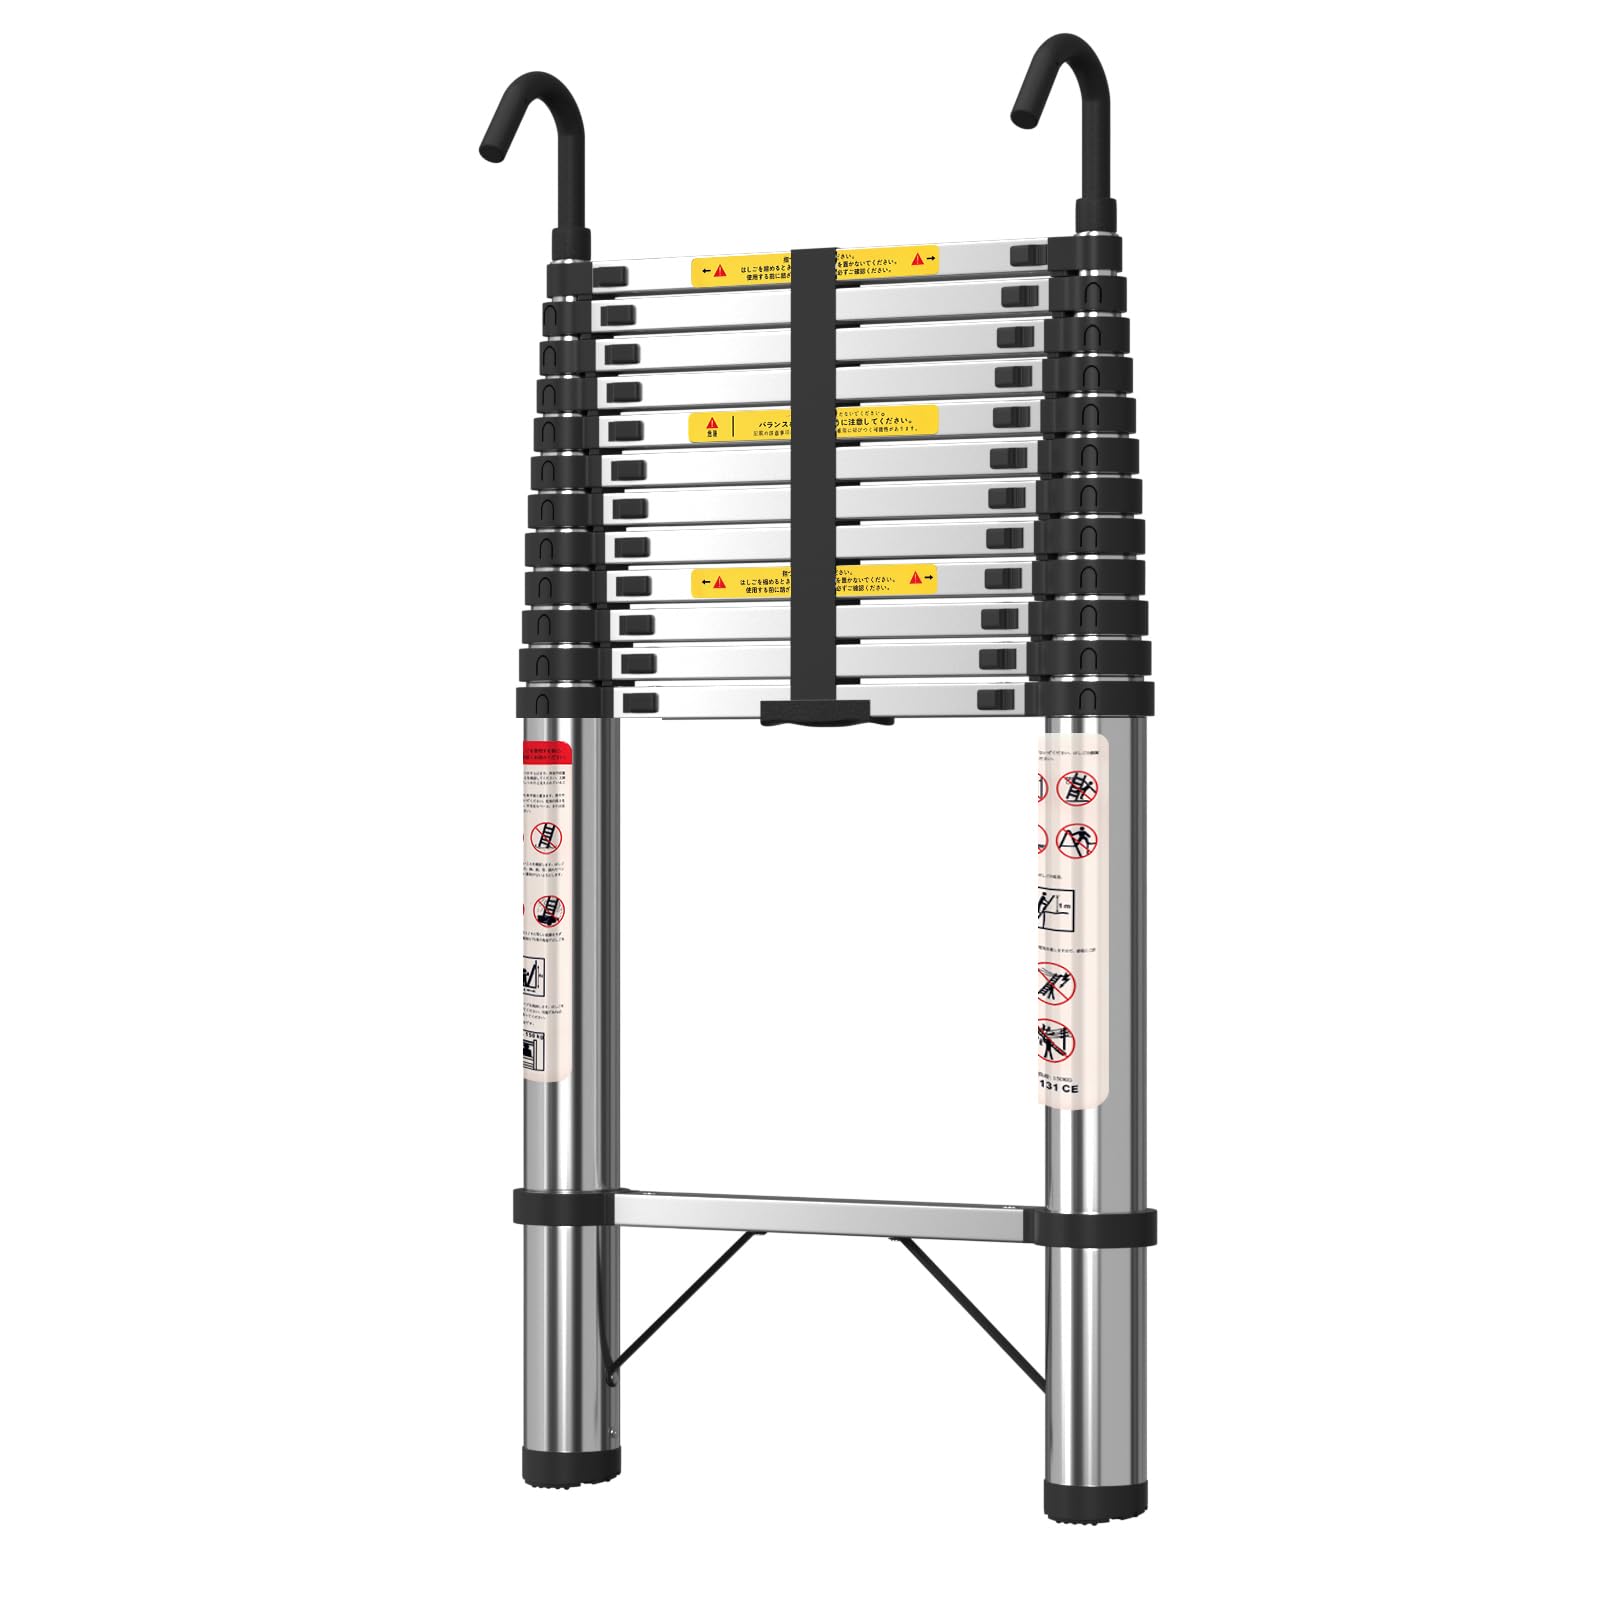 DayPlus 伸縮はしご ステンレス製 5m 折り畳み伸縮梯子 持ち運びやすい軽量 多機能 耐荷重150 kg 自動ロック 安全ロック スライド式 ステンレス鋼のはしご 梯子 室内室外両用 スライド式 フック付き (シルバー, 5.0m)